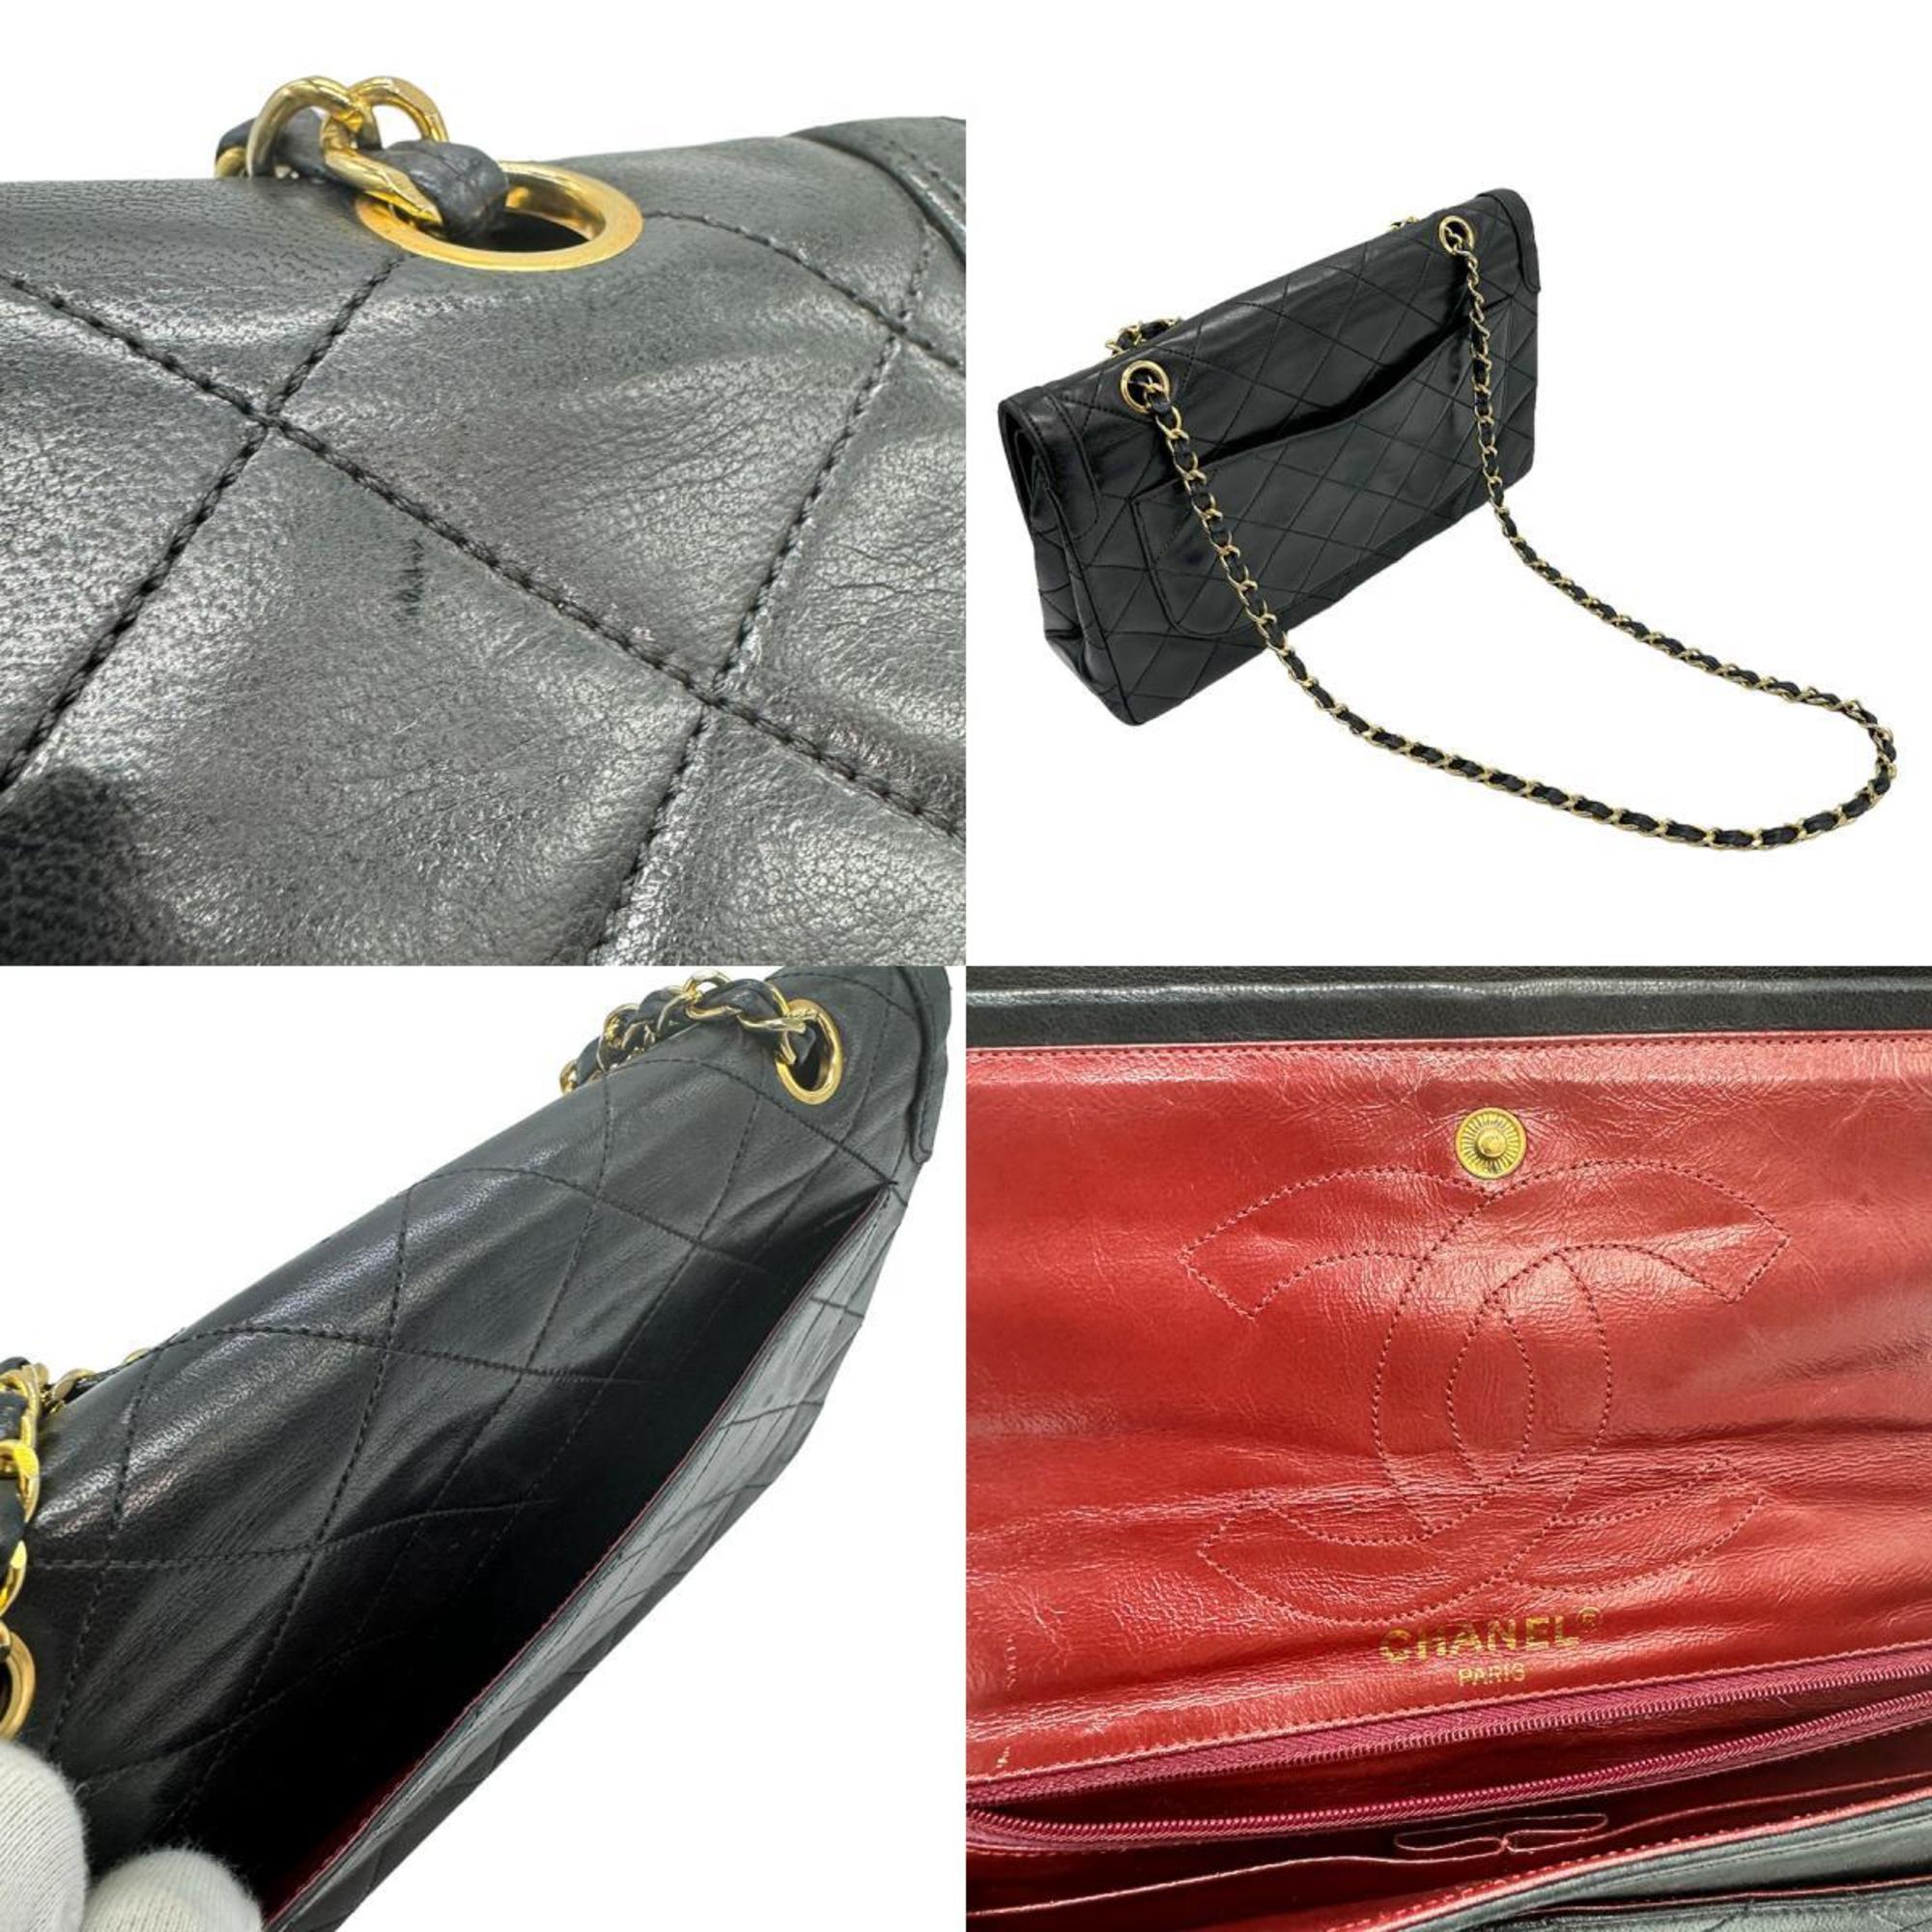 CHANEL Shoulder Bag Double Flap Leather/Metal Black/Gold/Silver Women's z0742